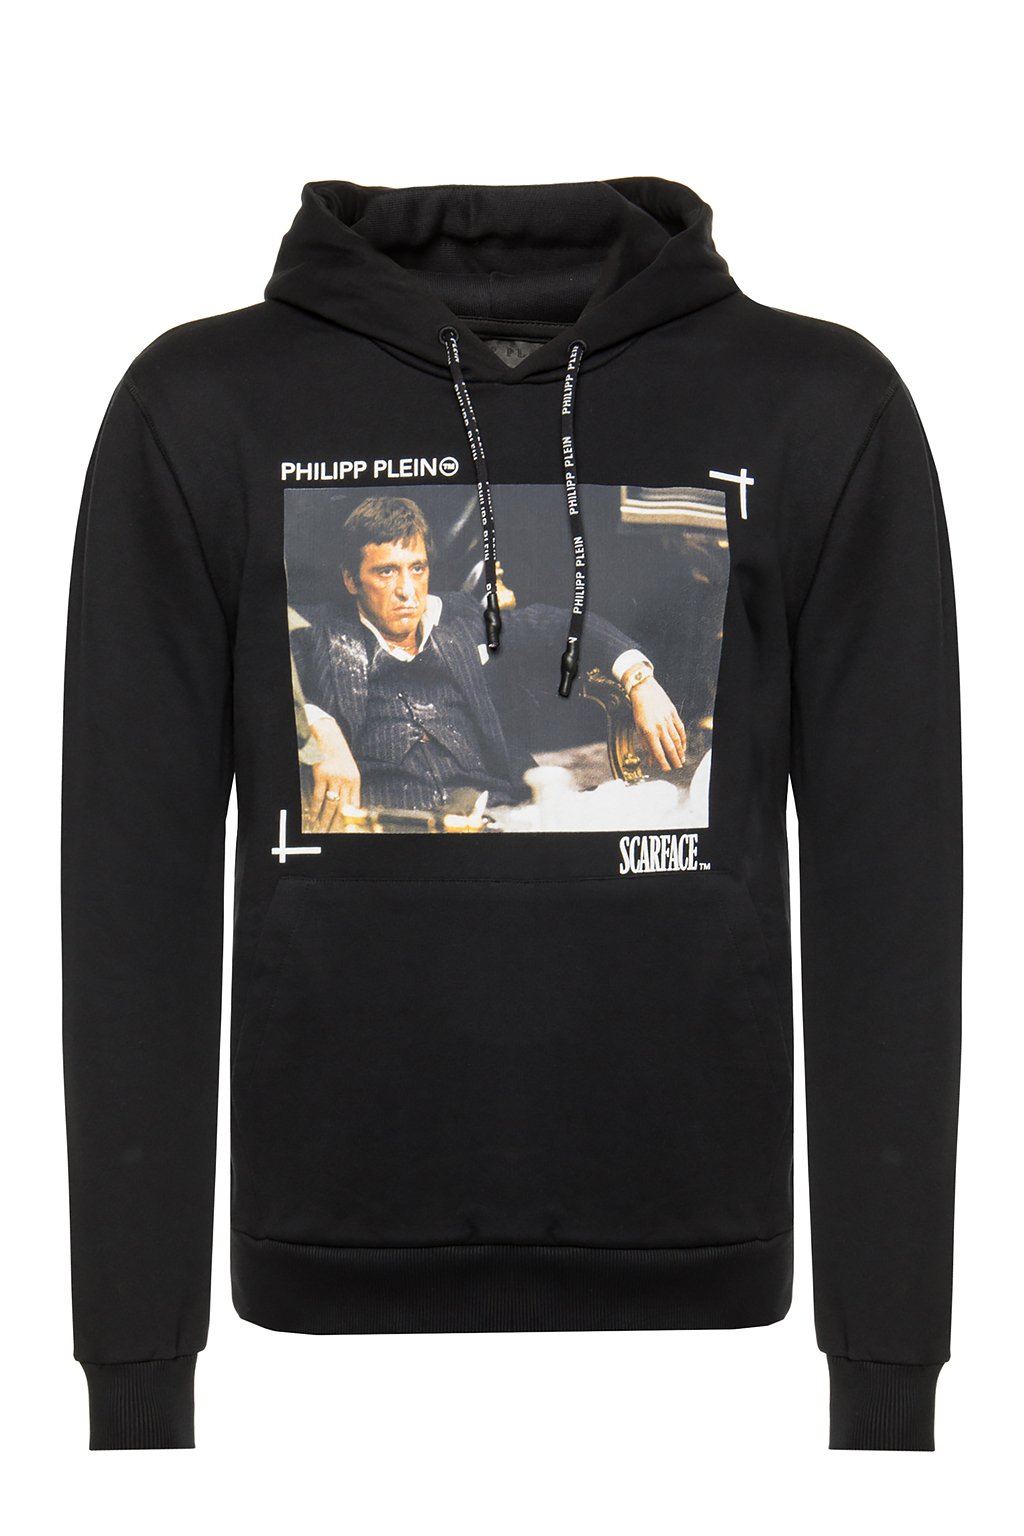 Scarface' motif sweatshirt Philipp Plein - Vitkac US